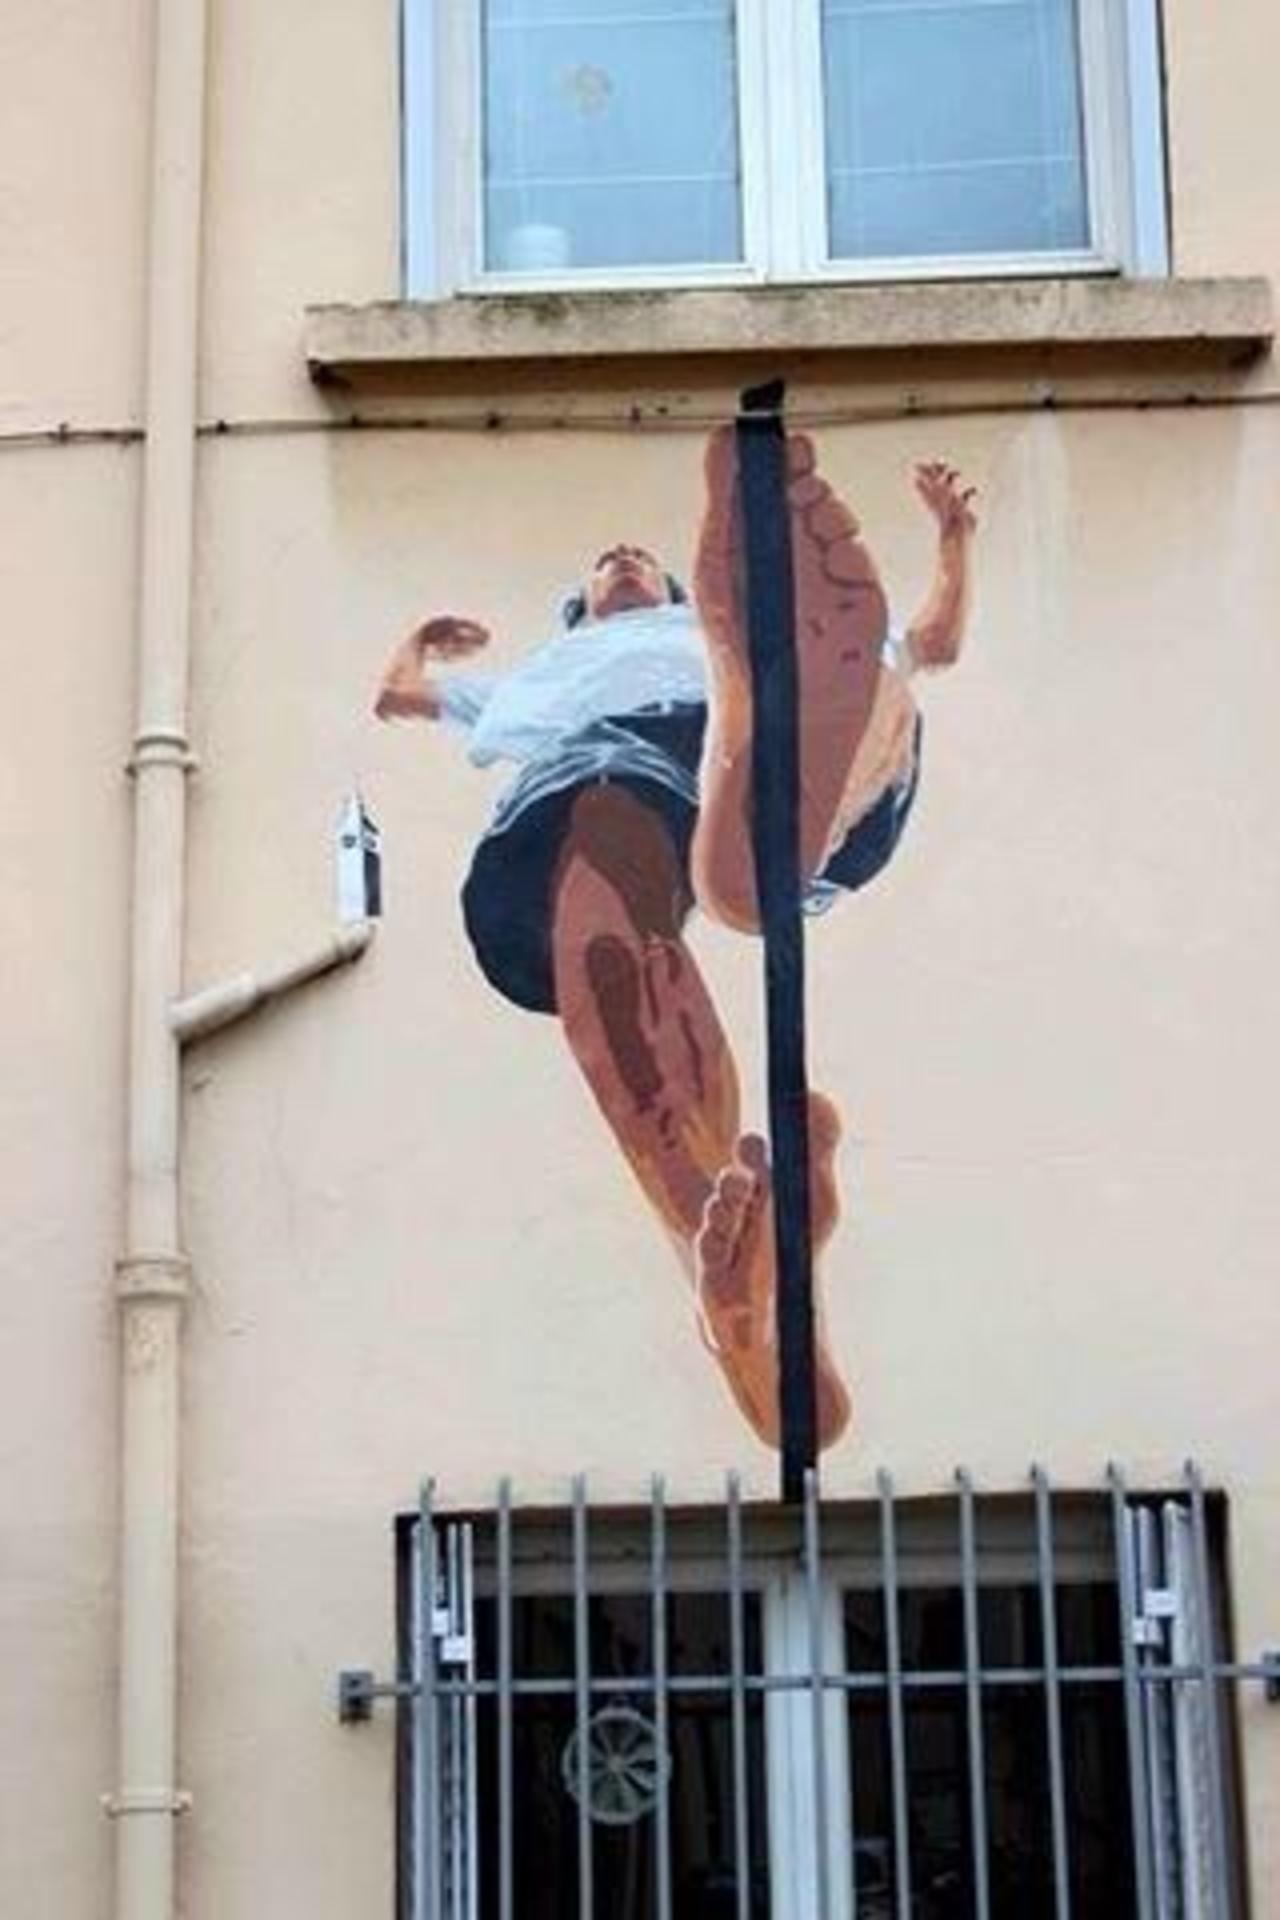 “@GoogleStreetArt: Cool #streetart of a Tightrope Walker by artist 'Big Ben' in Lyon, France #art #mural #graffiti http://t.co/VKkSTBoayb”